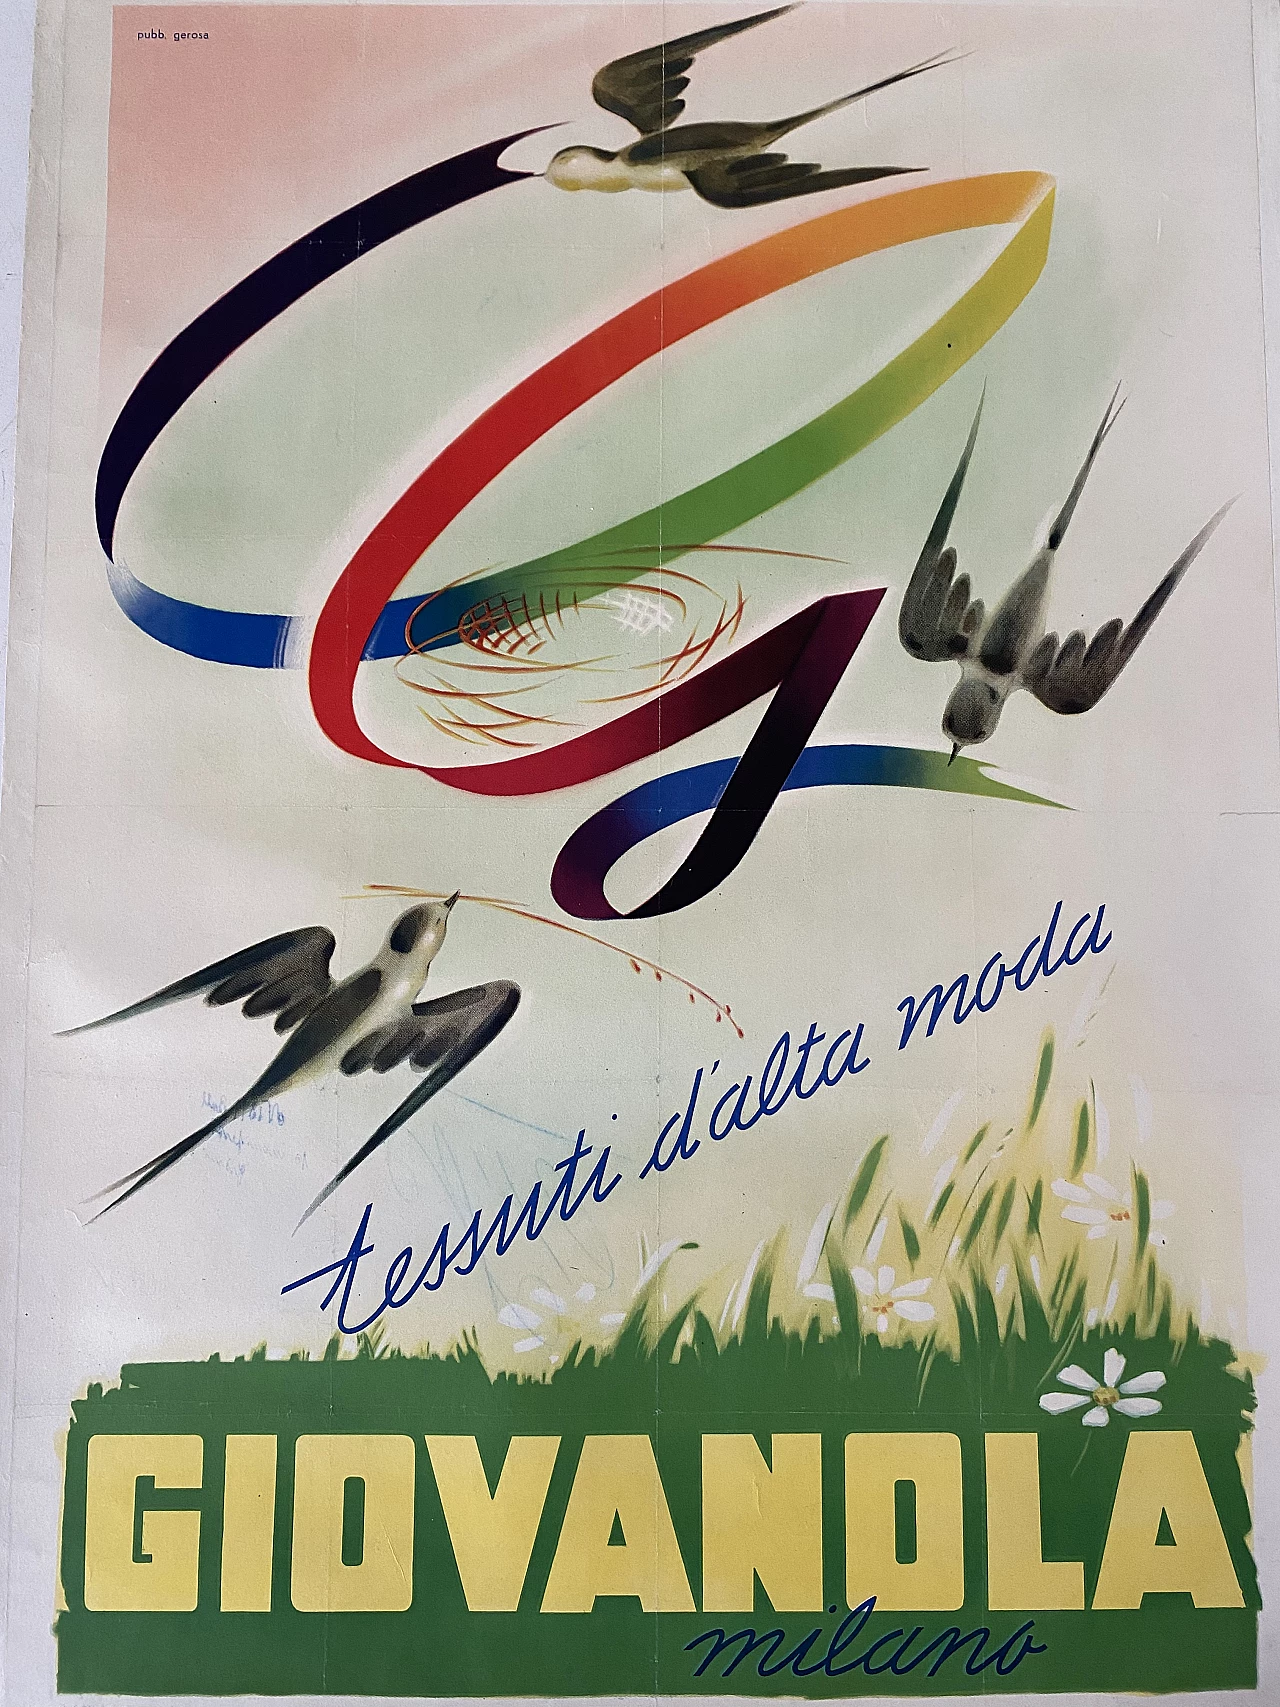 Giovanola advertising poster, 1960s 6